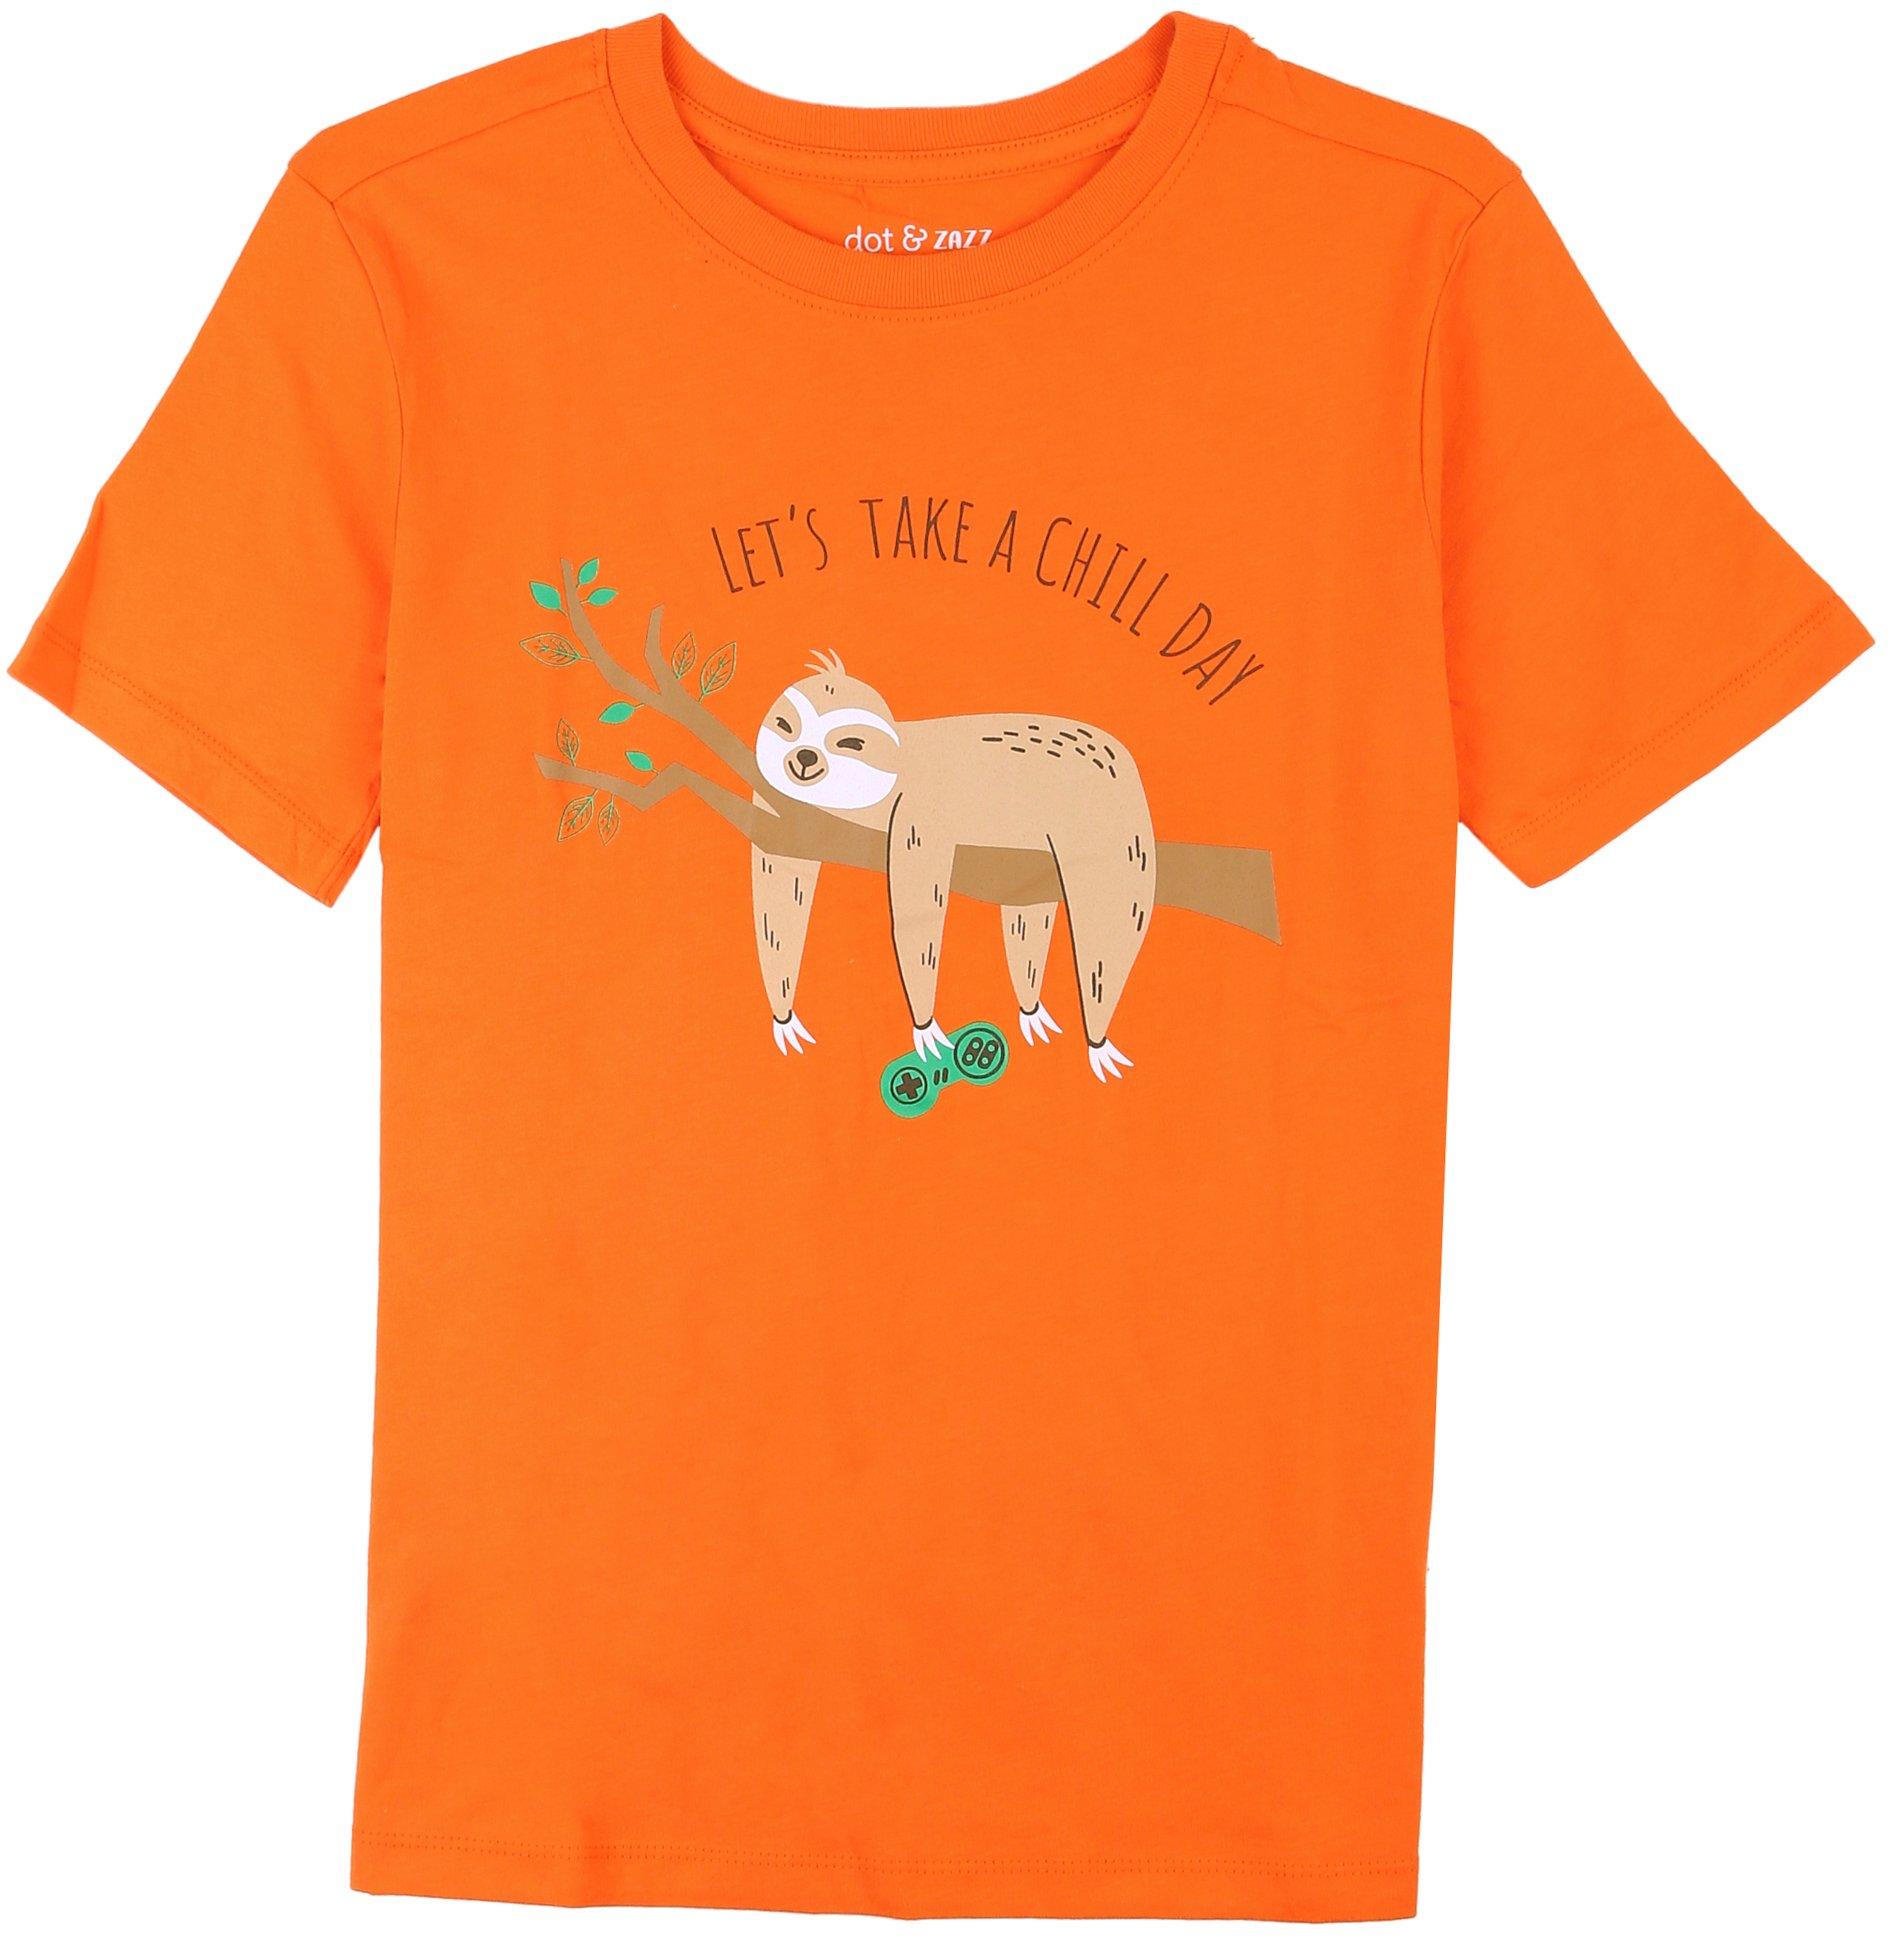 DOT & ZAZZ Boys Chill Sloth Short Sleeve T-Shirt